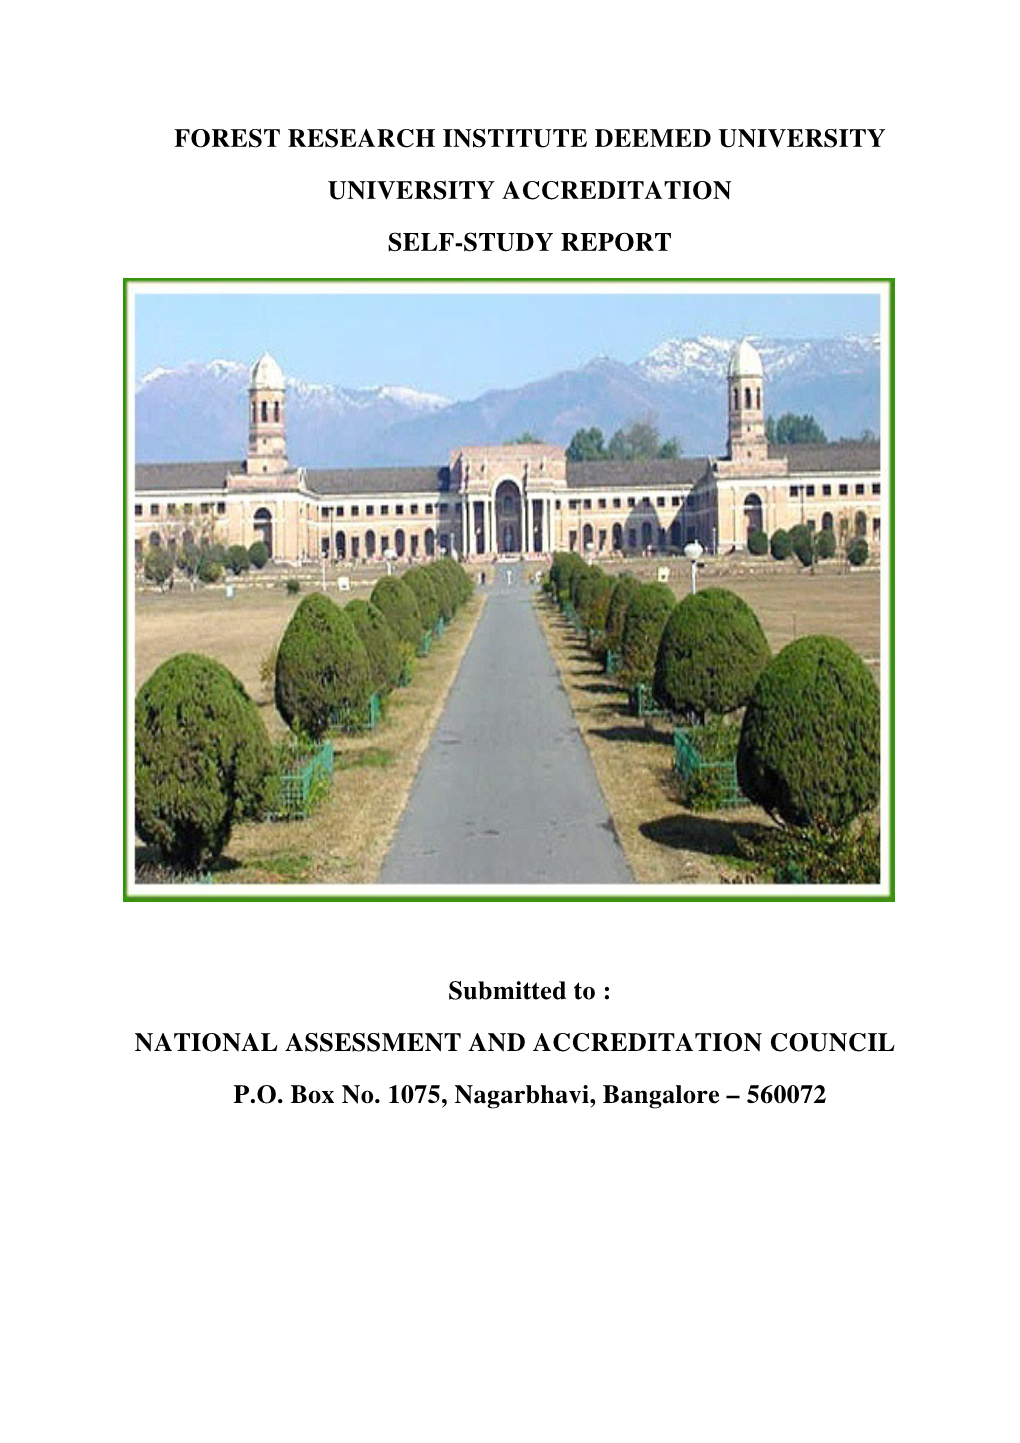 Self Study Report of FRI Deemed University for NAAC Accreditation